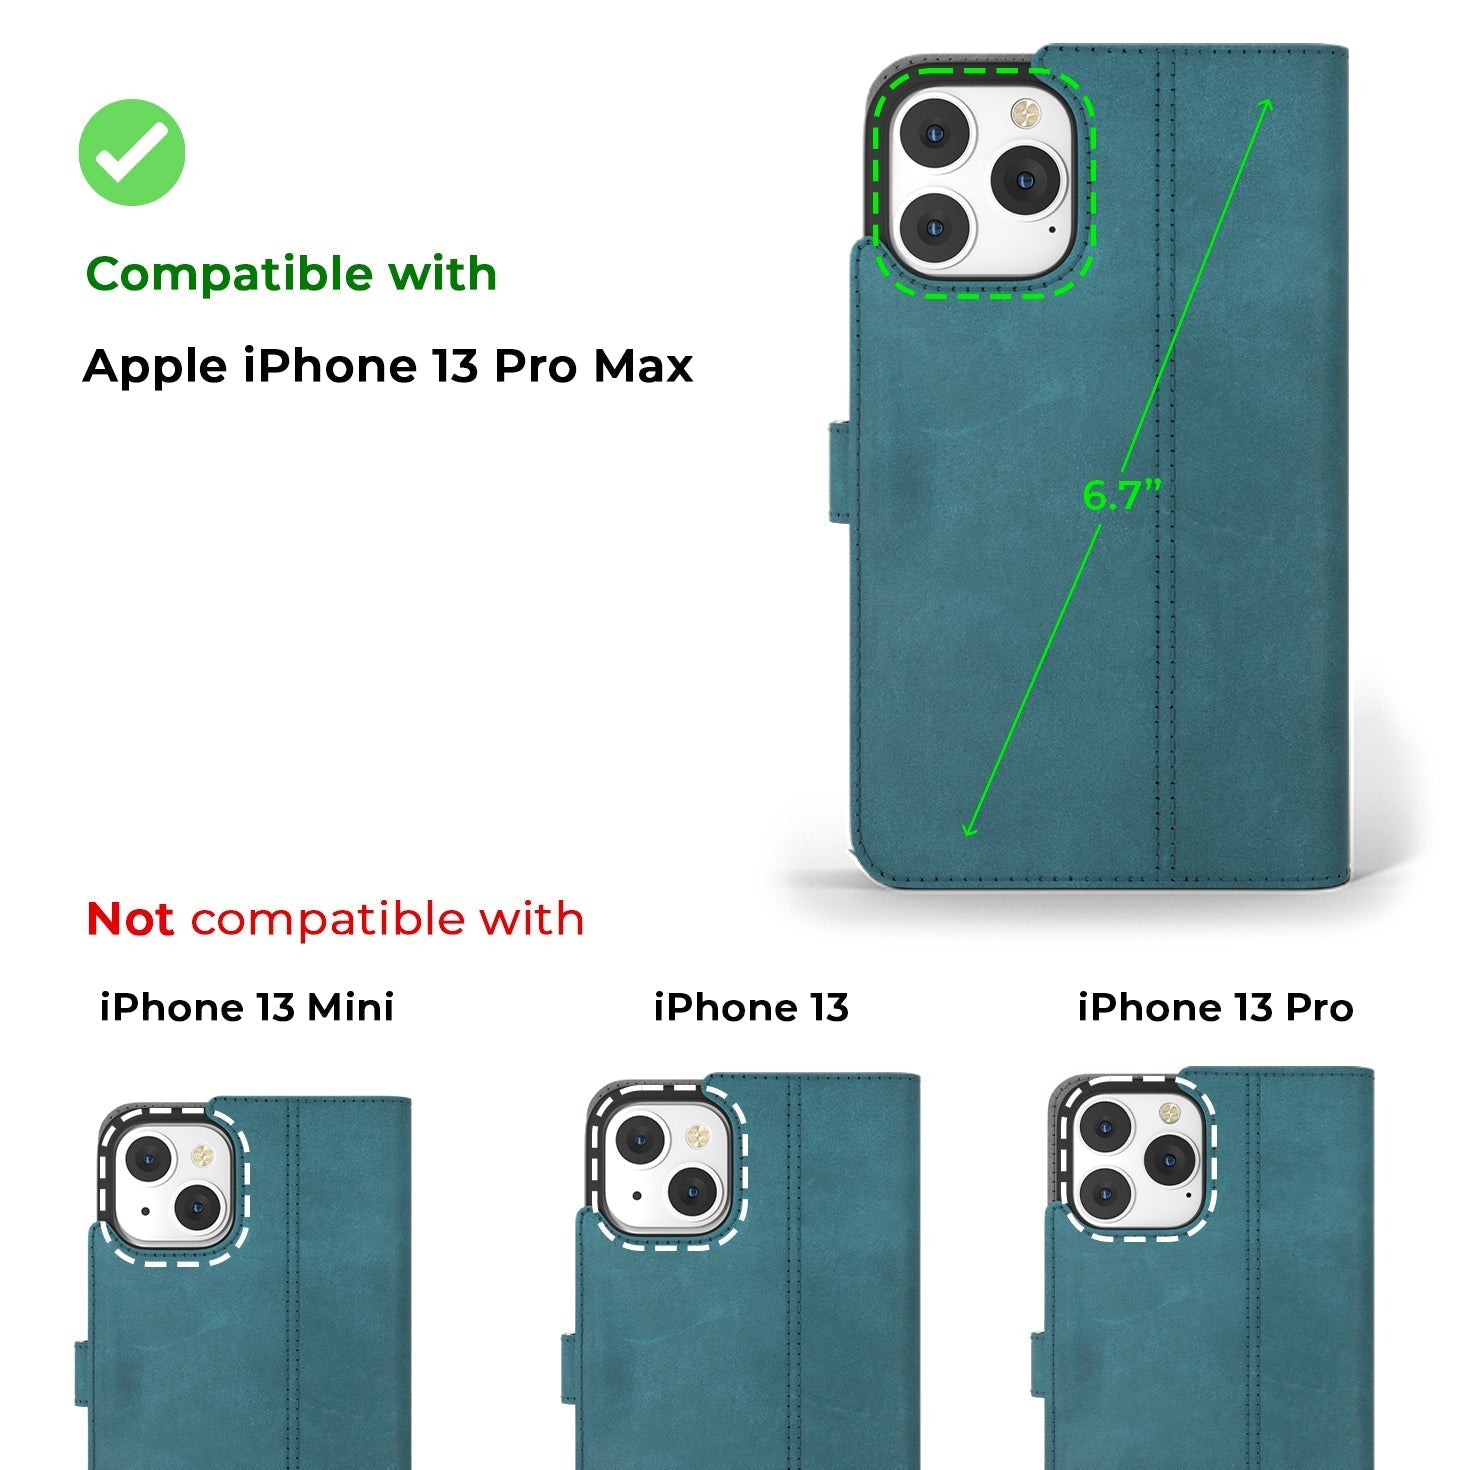 Complete Protection Bundle (Vintage Wallet) - Apple iPhone 13 Pro Max